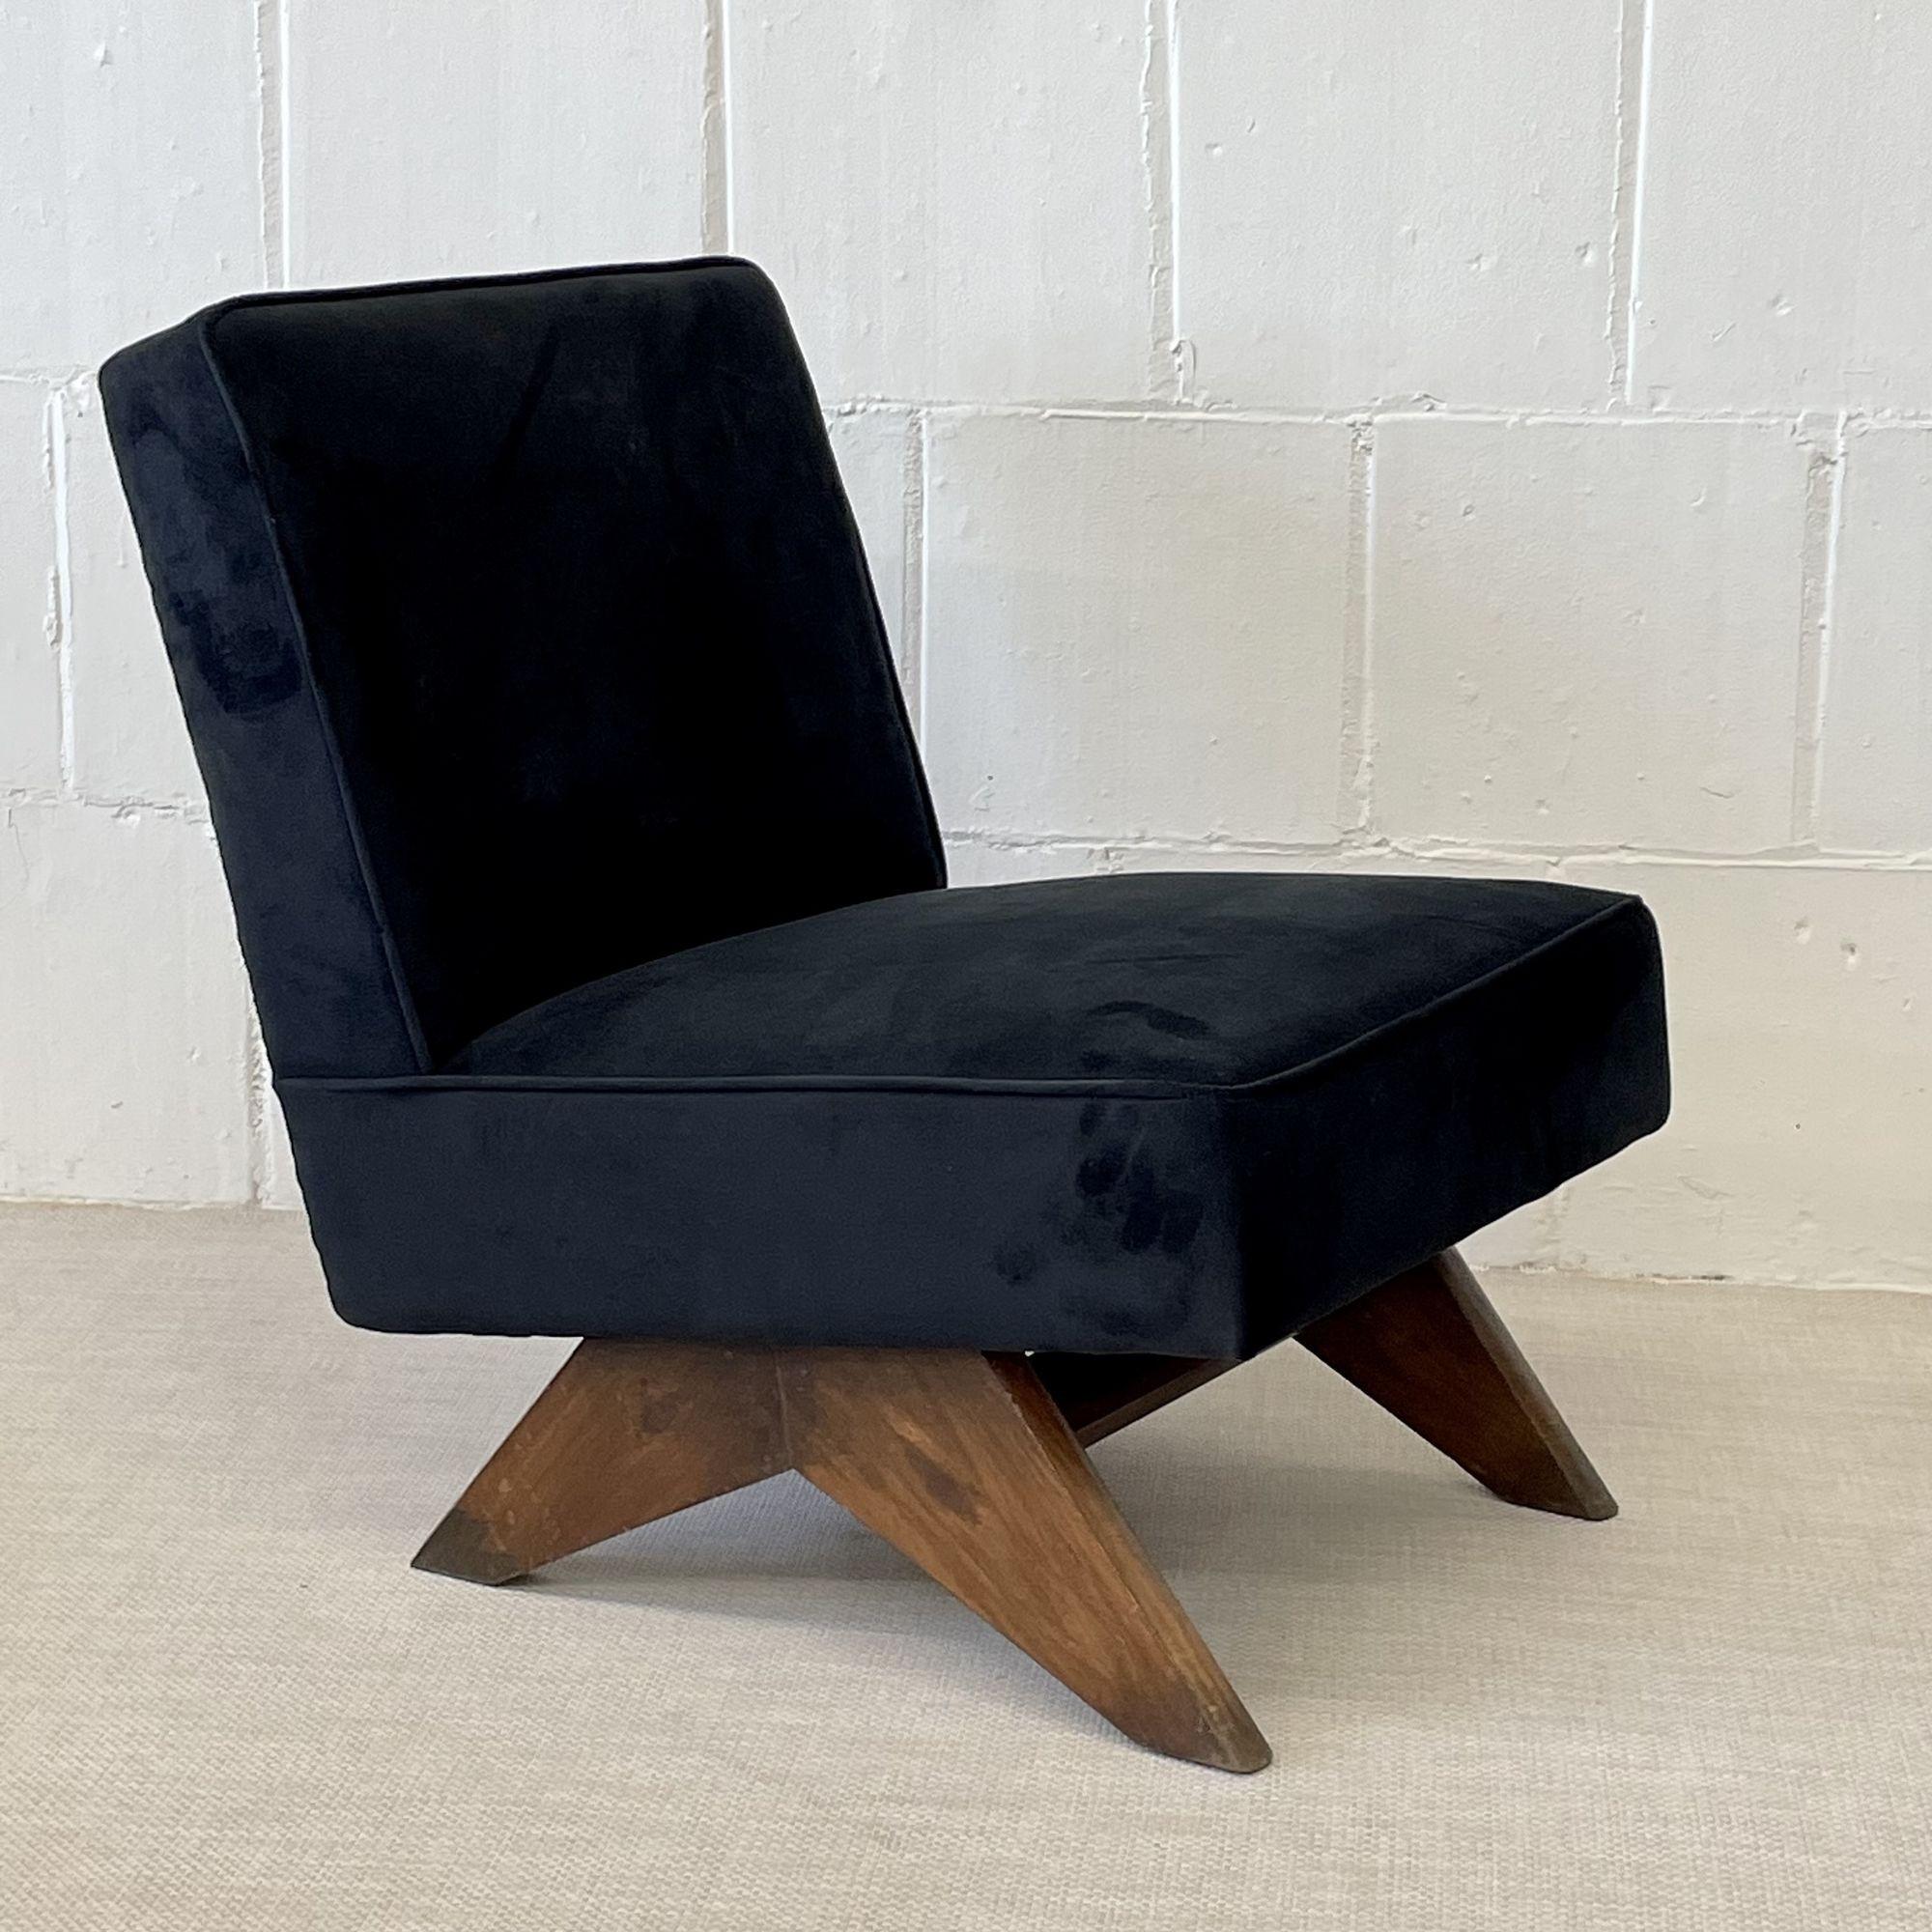 Mid-20th Century Pierre Jeanneret Upholstered Sofa Set, Black Suede, Mid-Century Modern